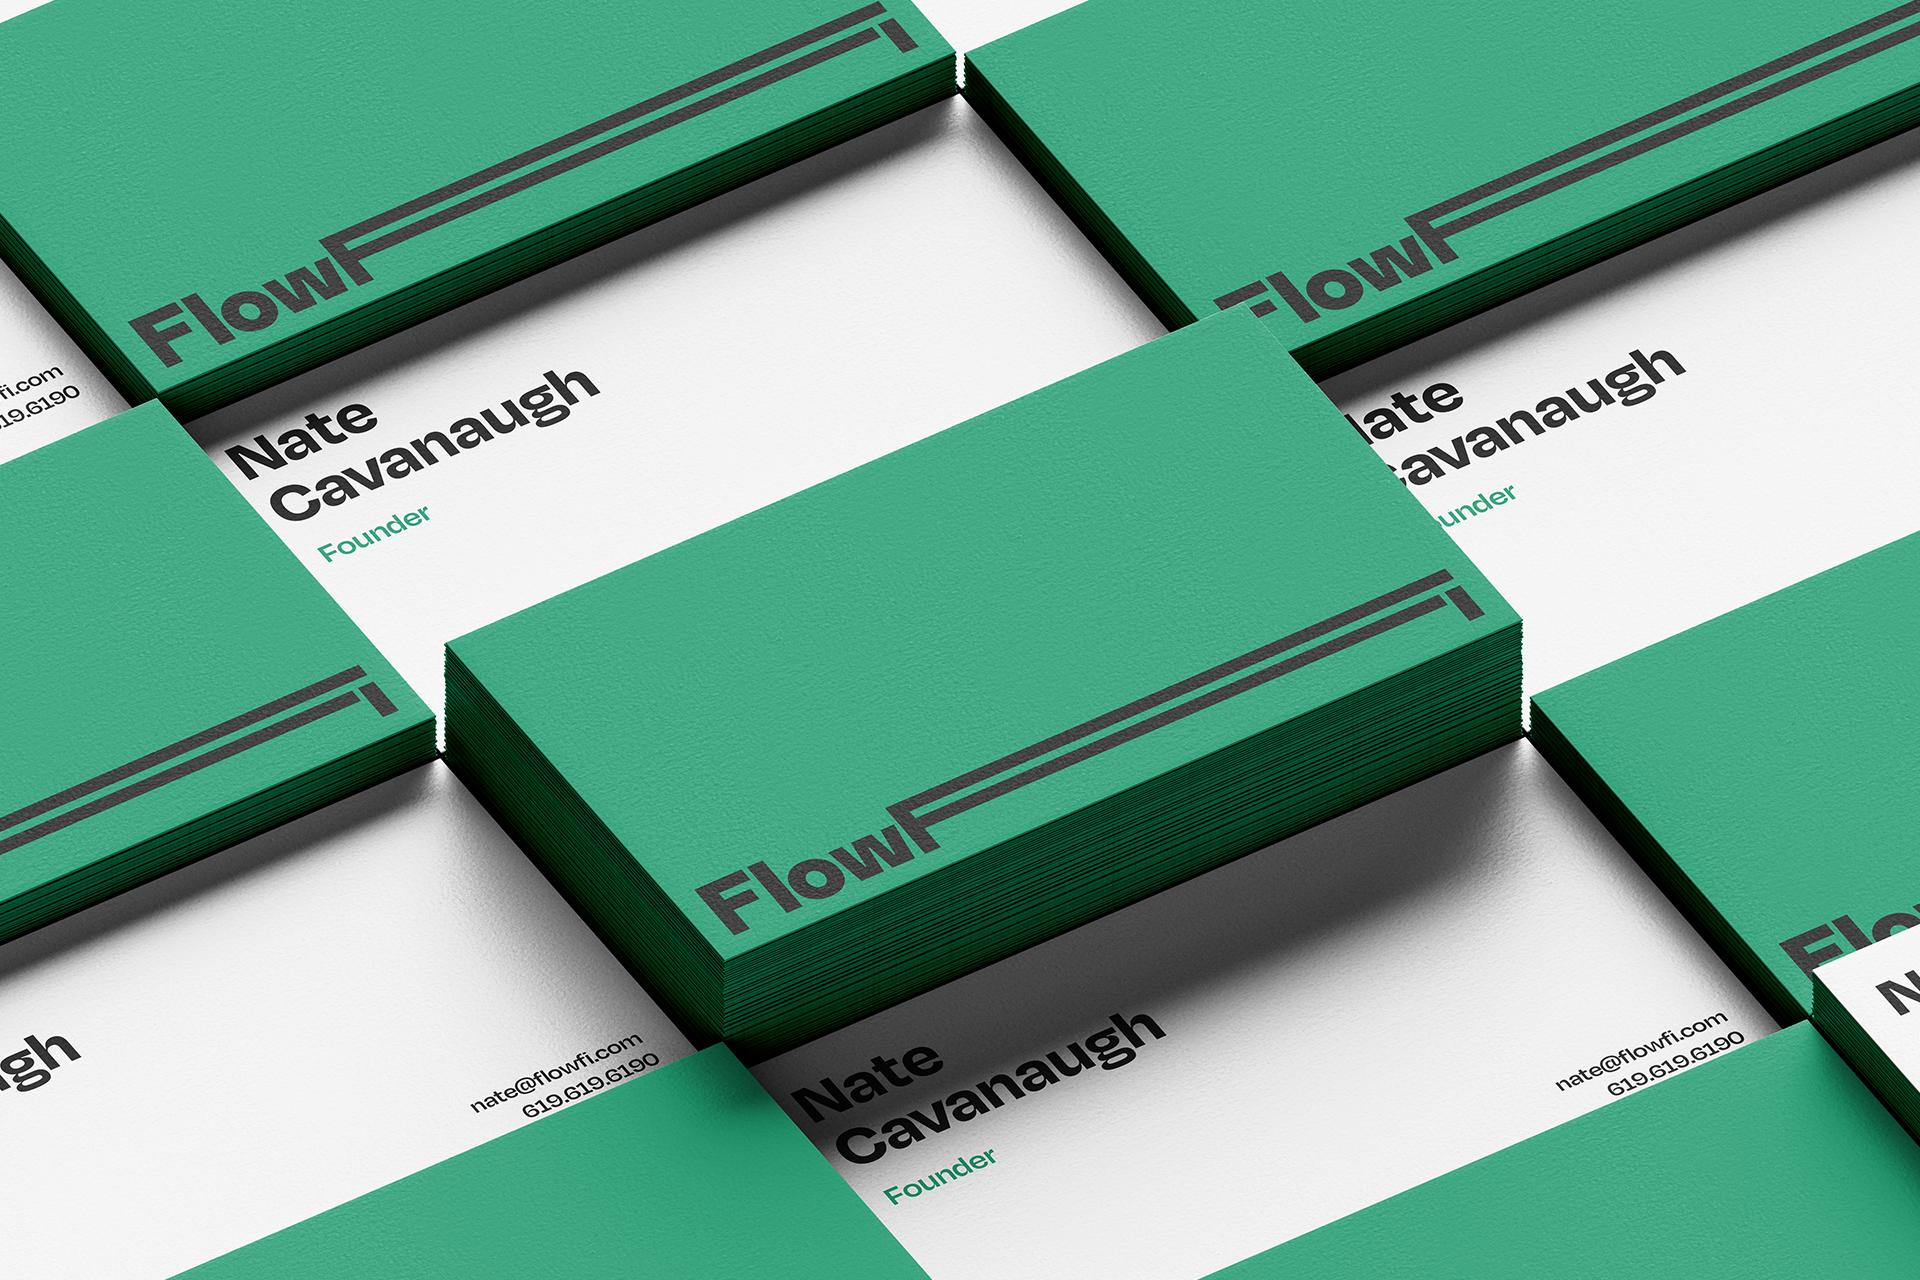 FlowFi-08-Biz Card